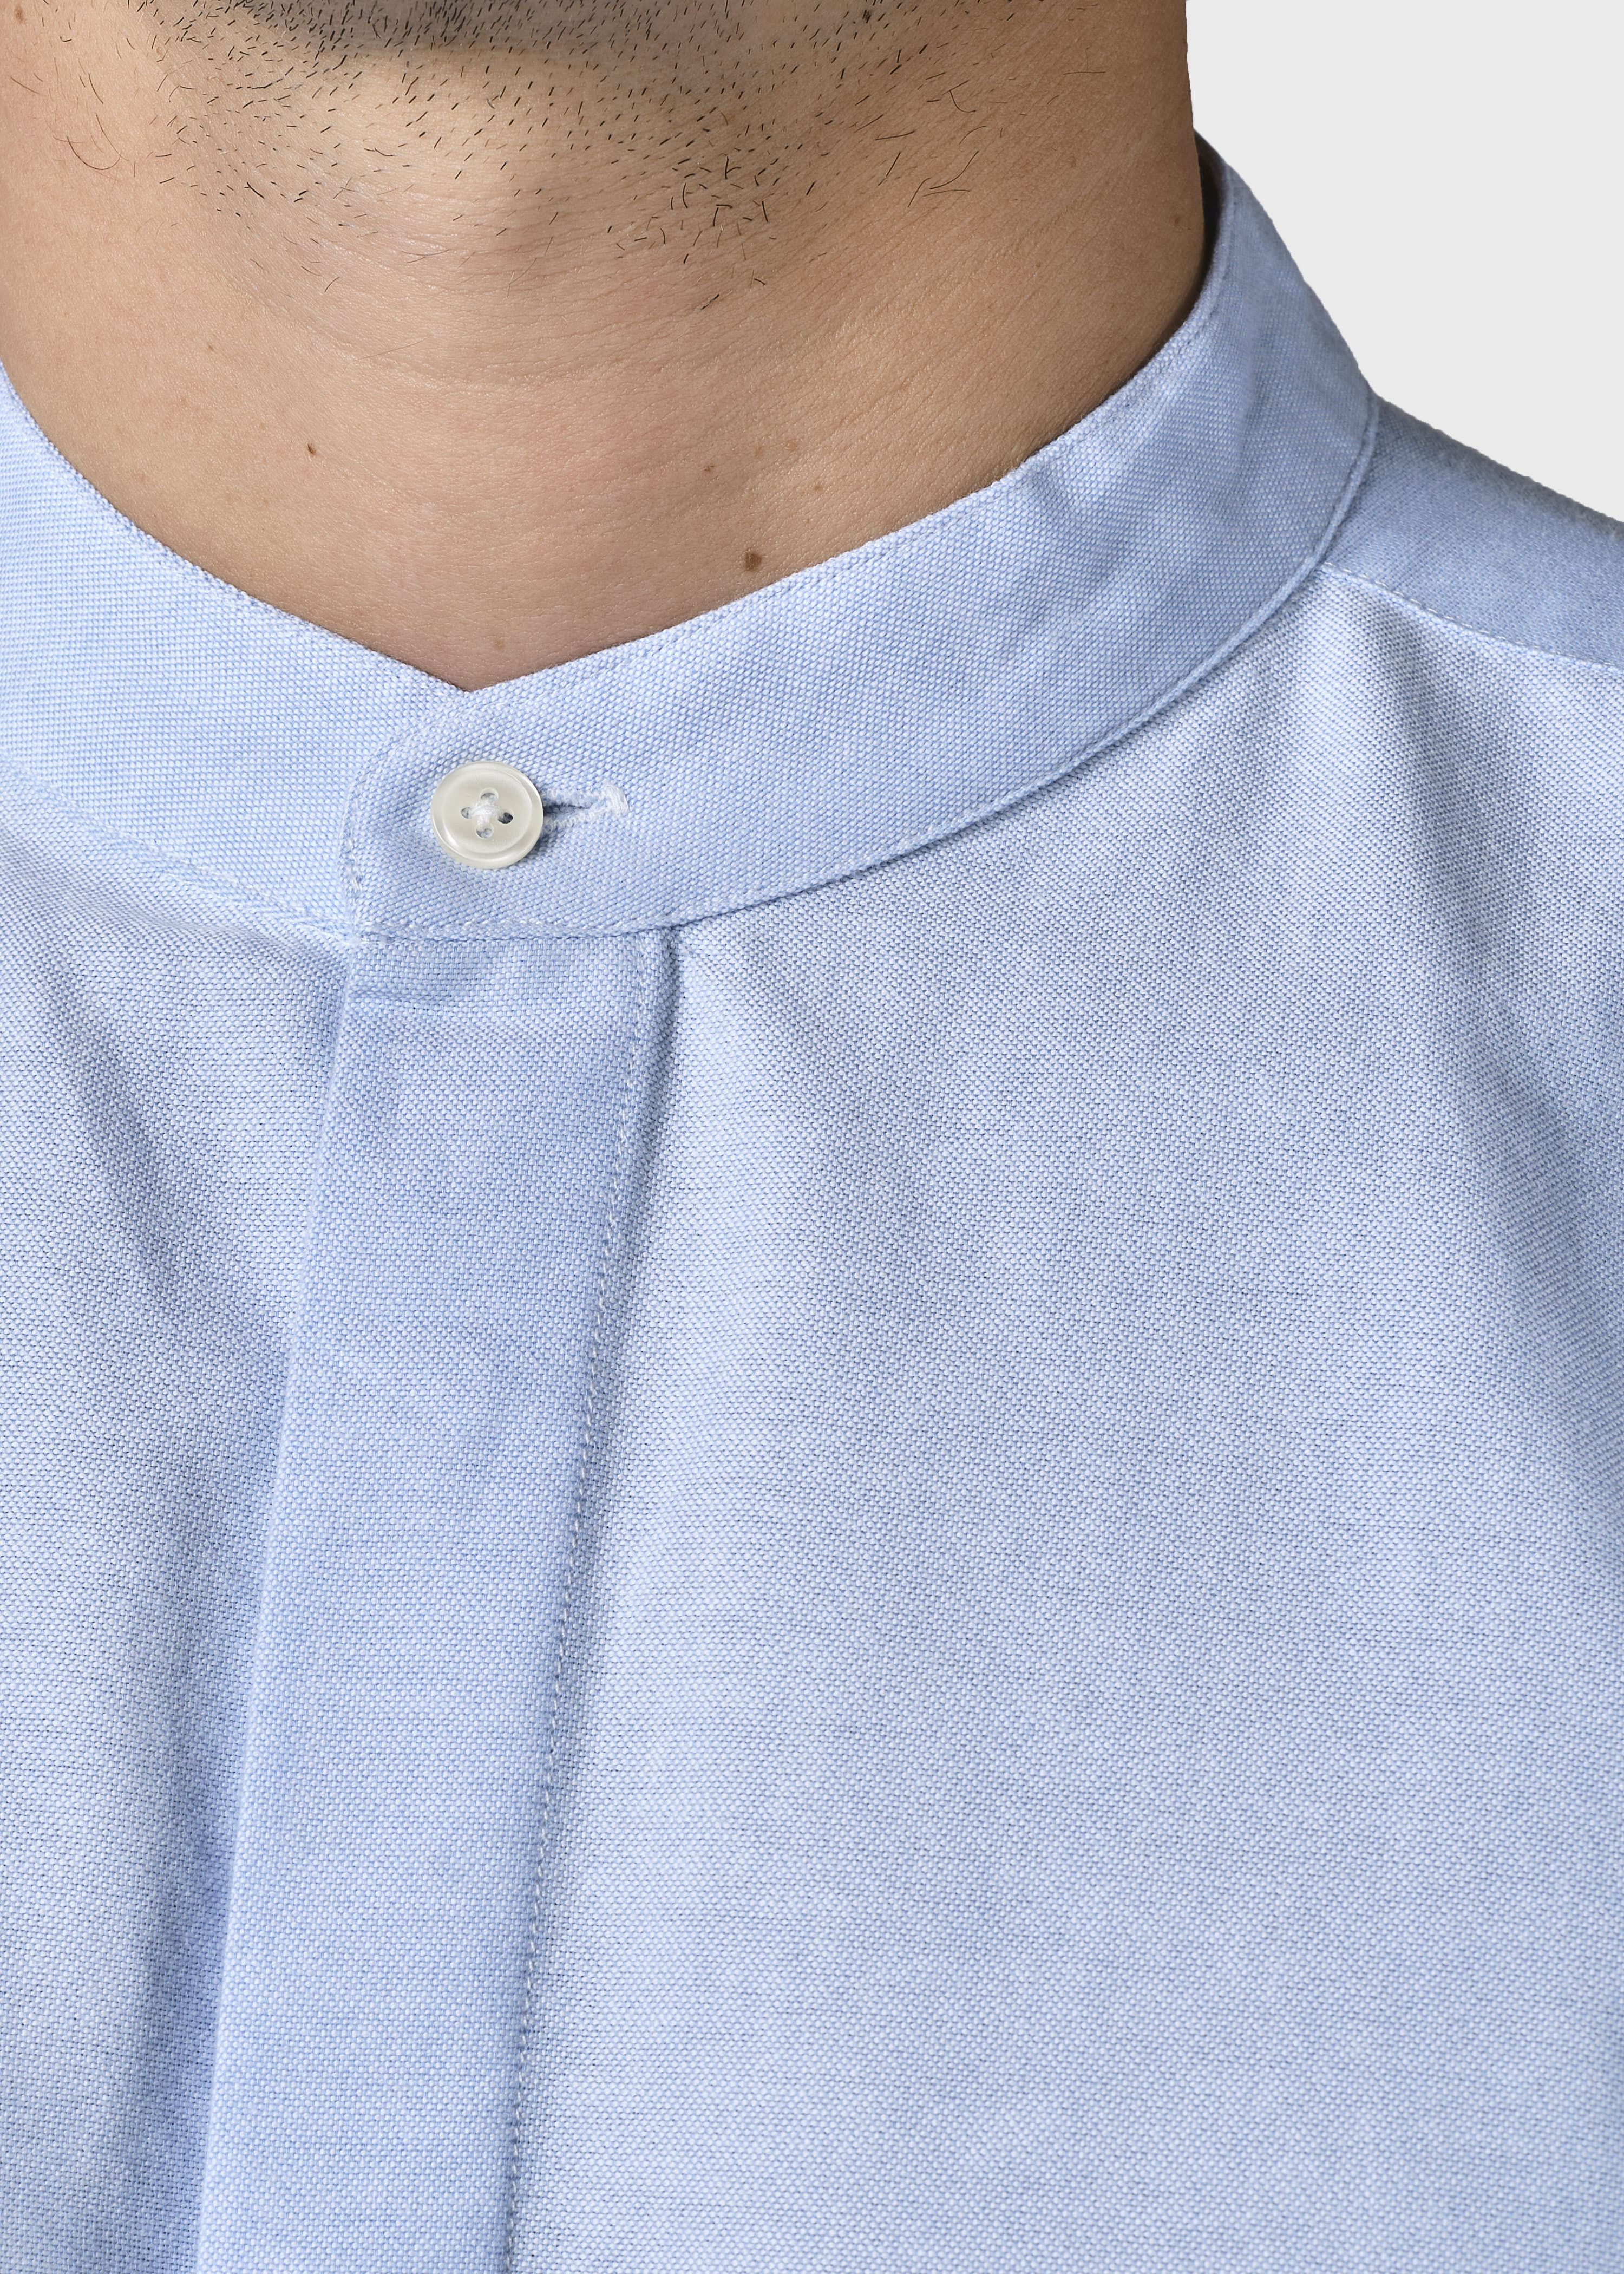 Mandarin collar shirt Simon light blue